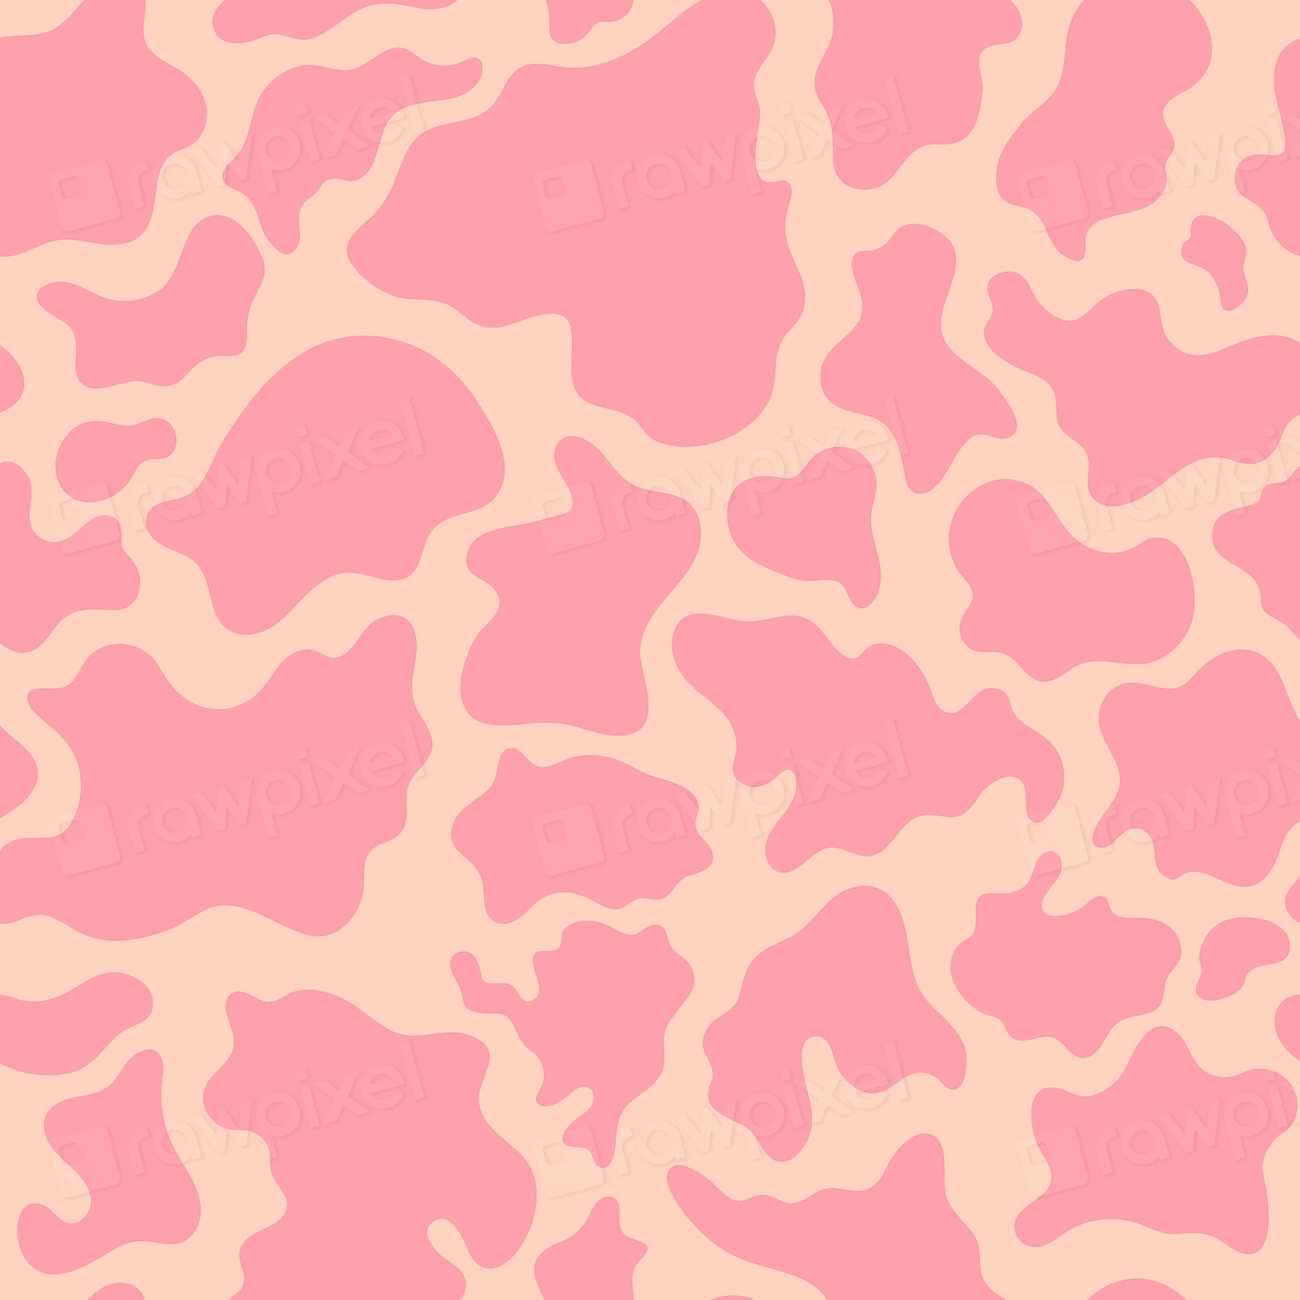 Cow pattern wallpaper